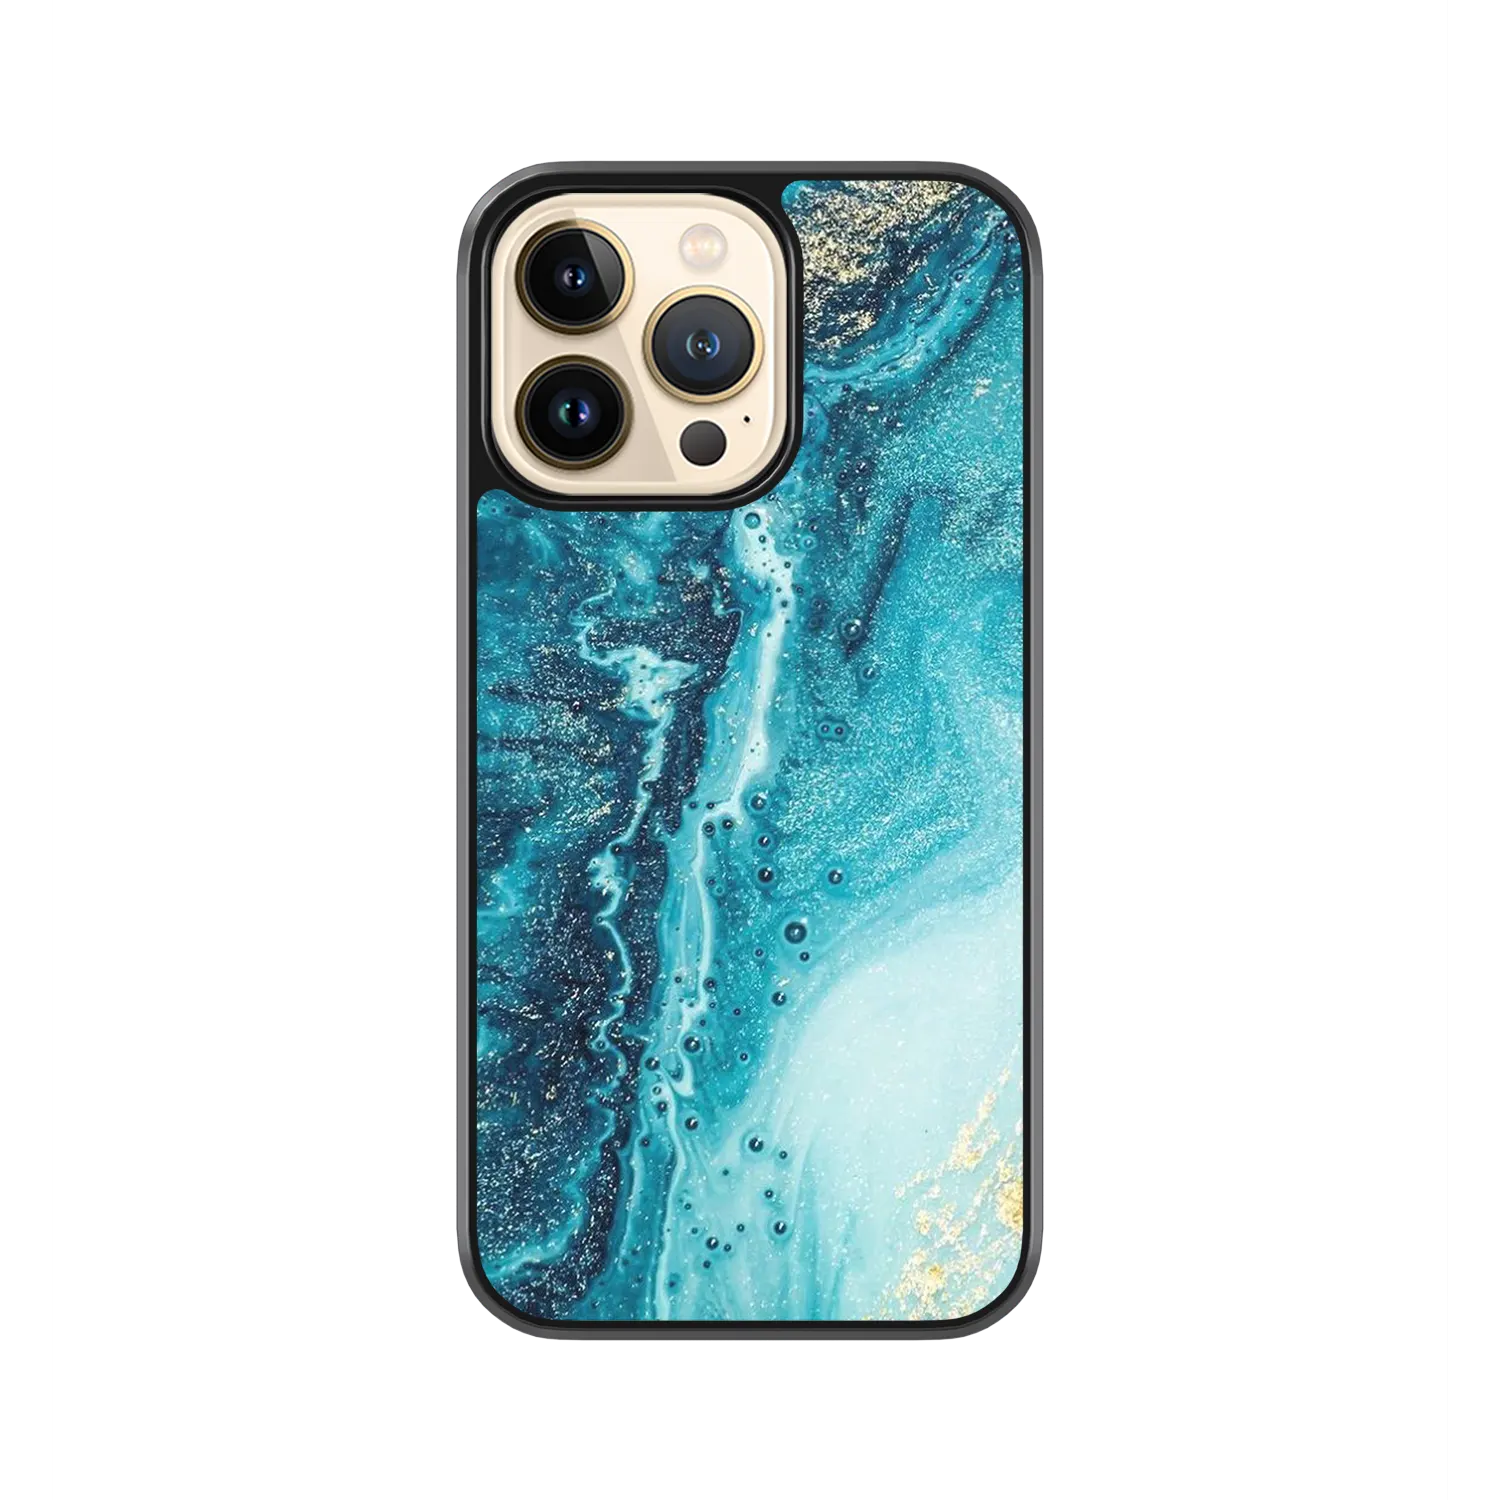 Blue Dream iphone 11 pro max case